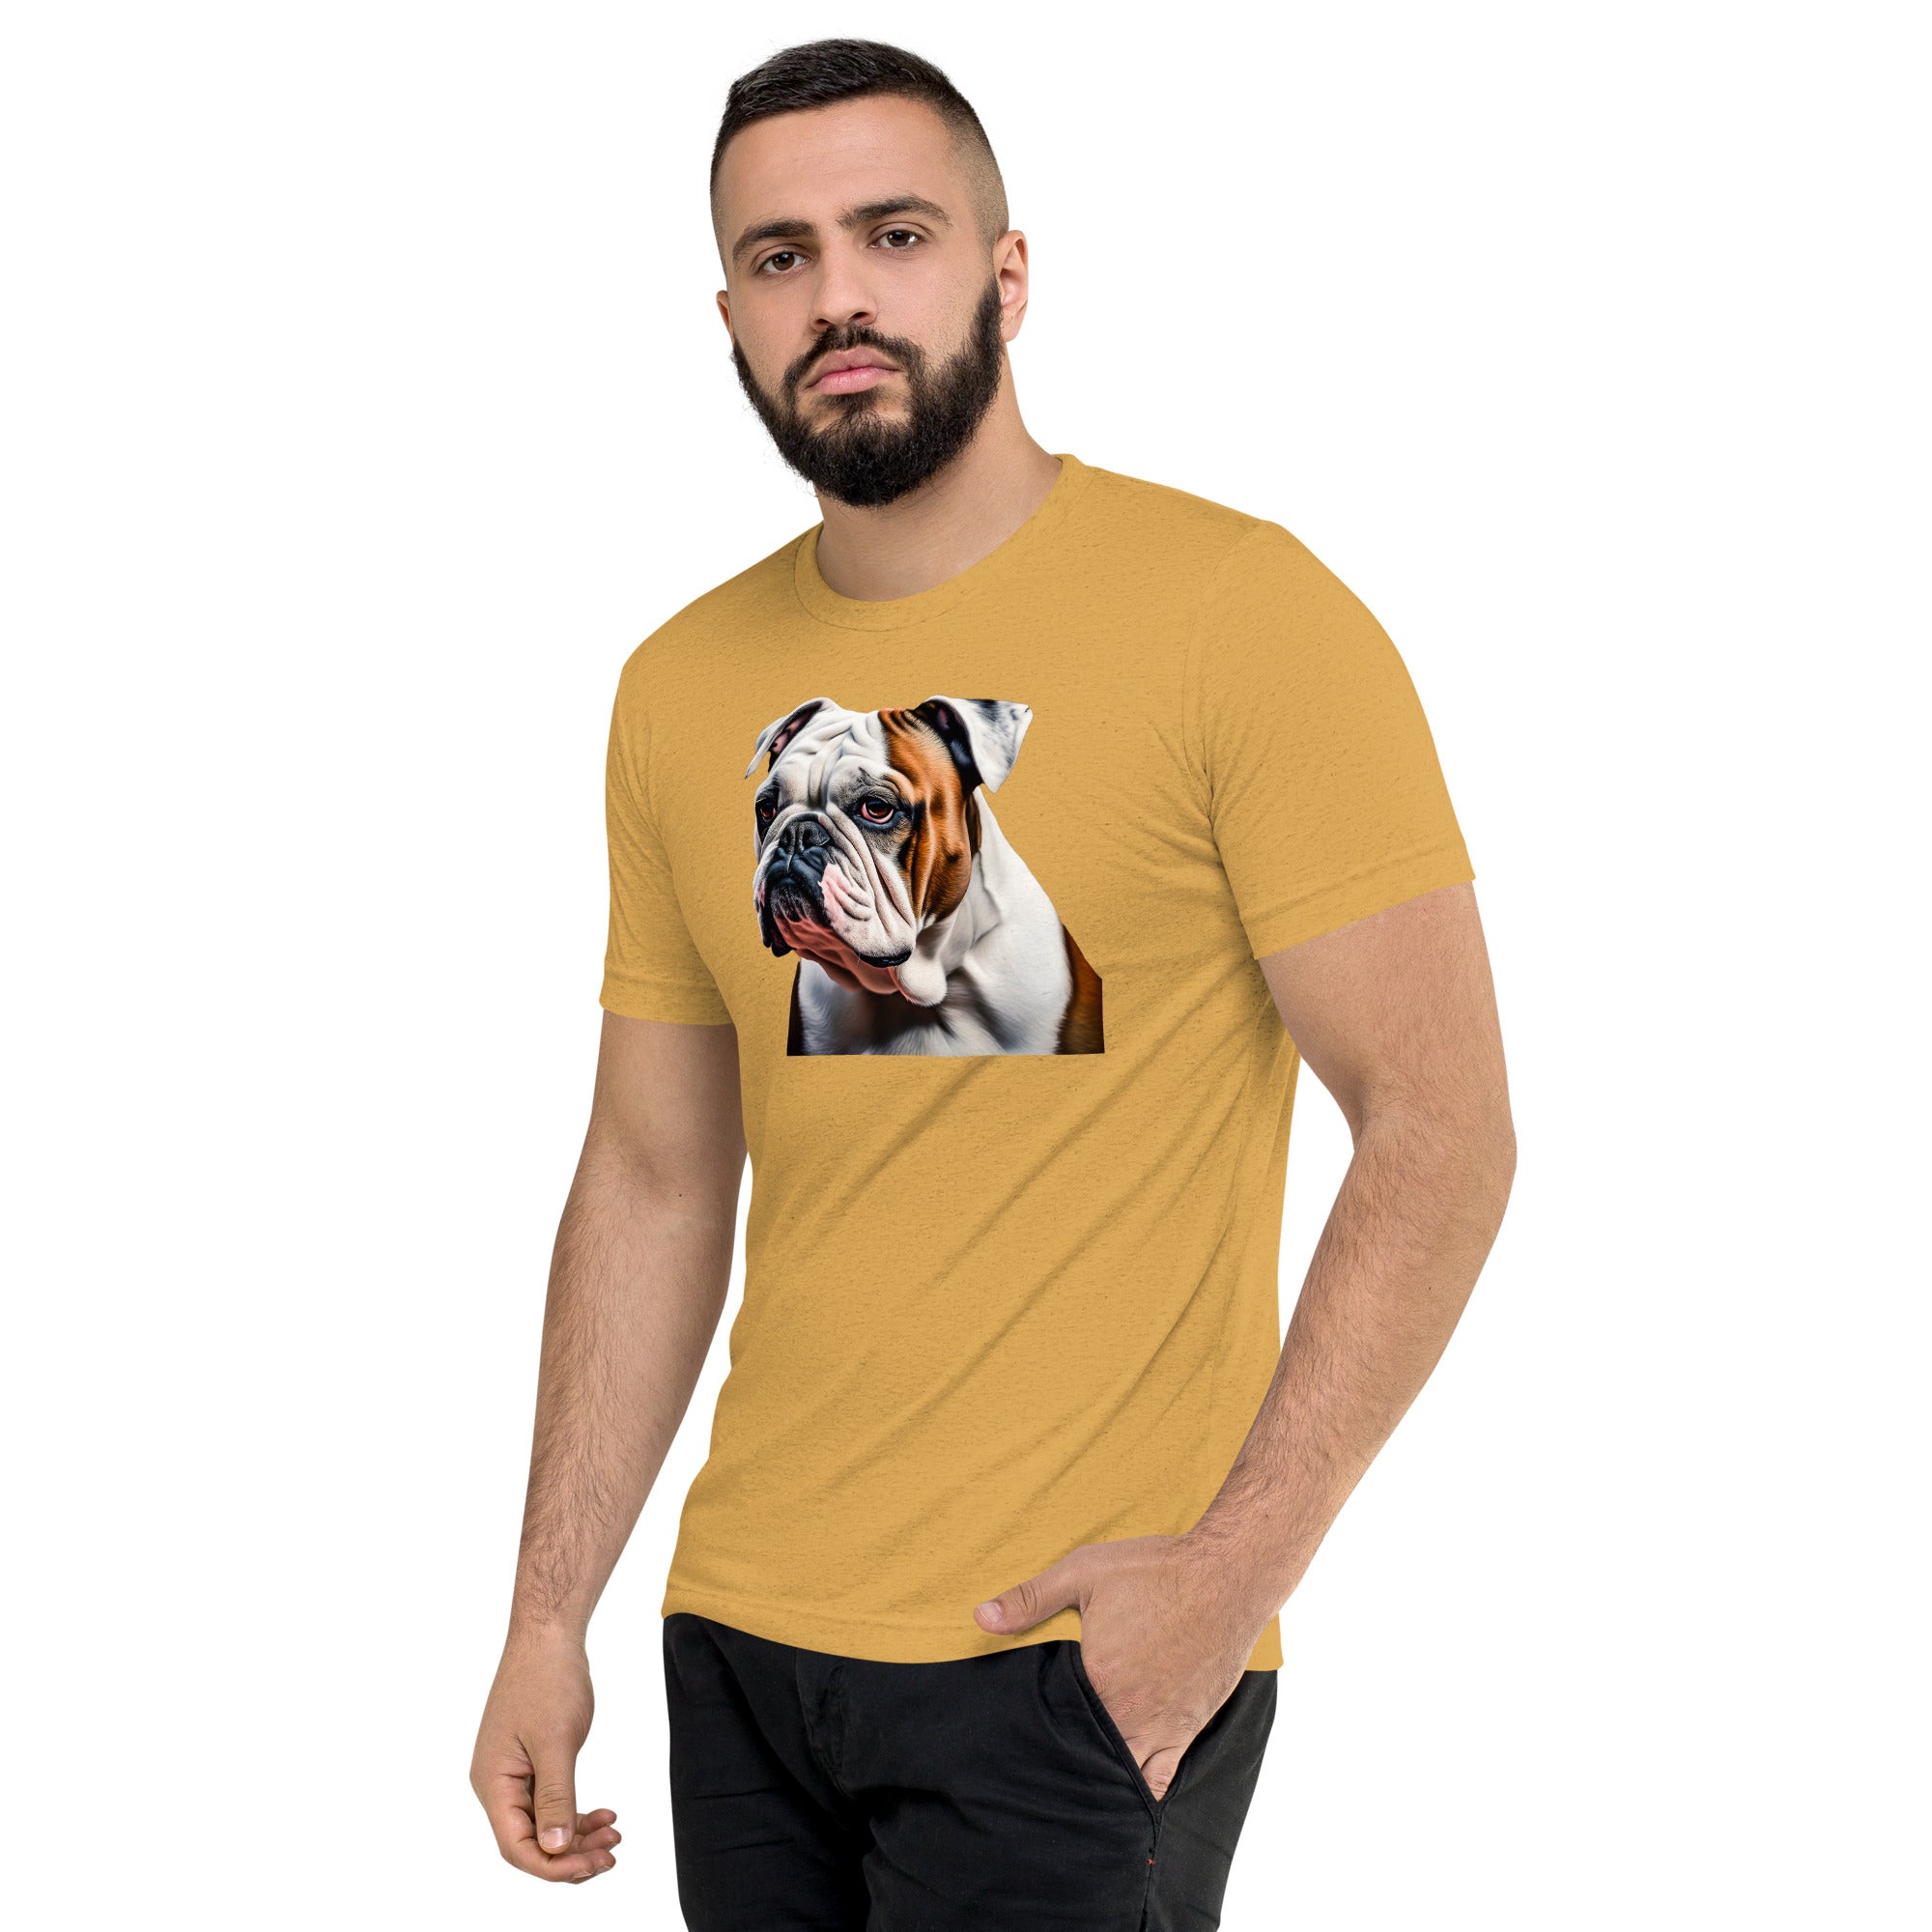 Stylisches Tshirt Motiv Bulldogge Bulldogge